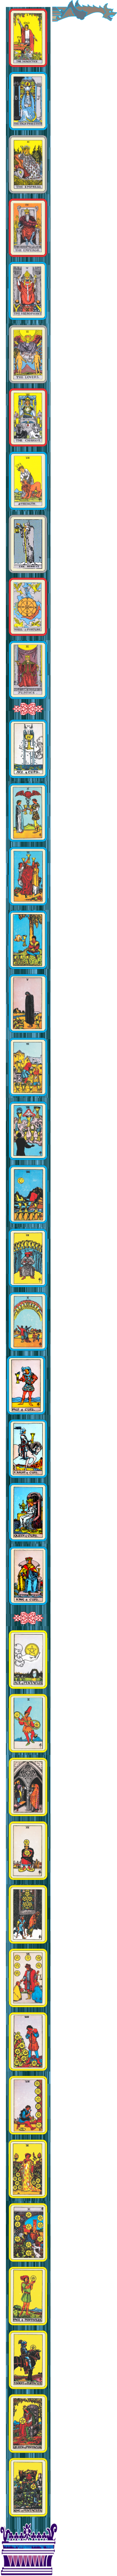 Graphic Frame-Left Gargoyle and Column of Tarot Cards